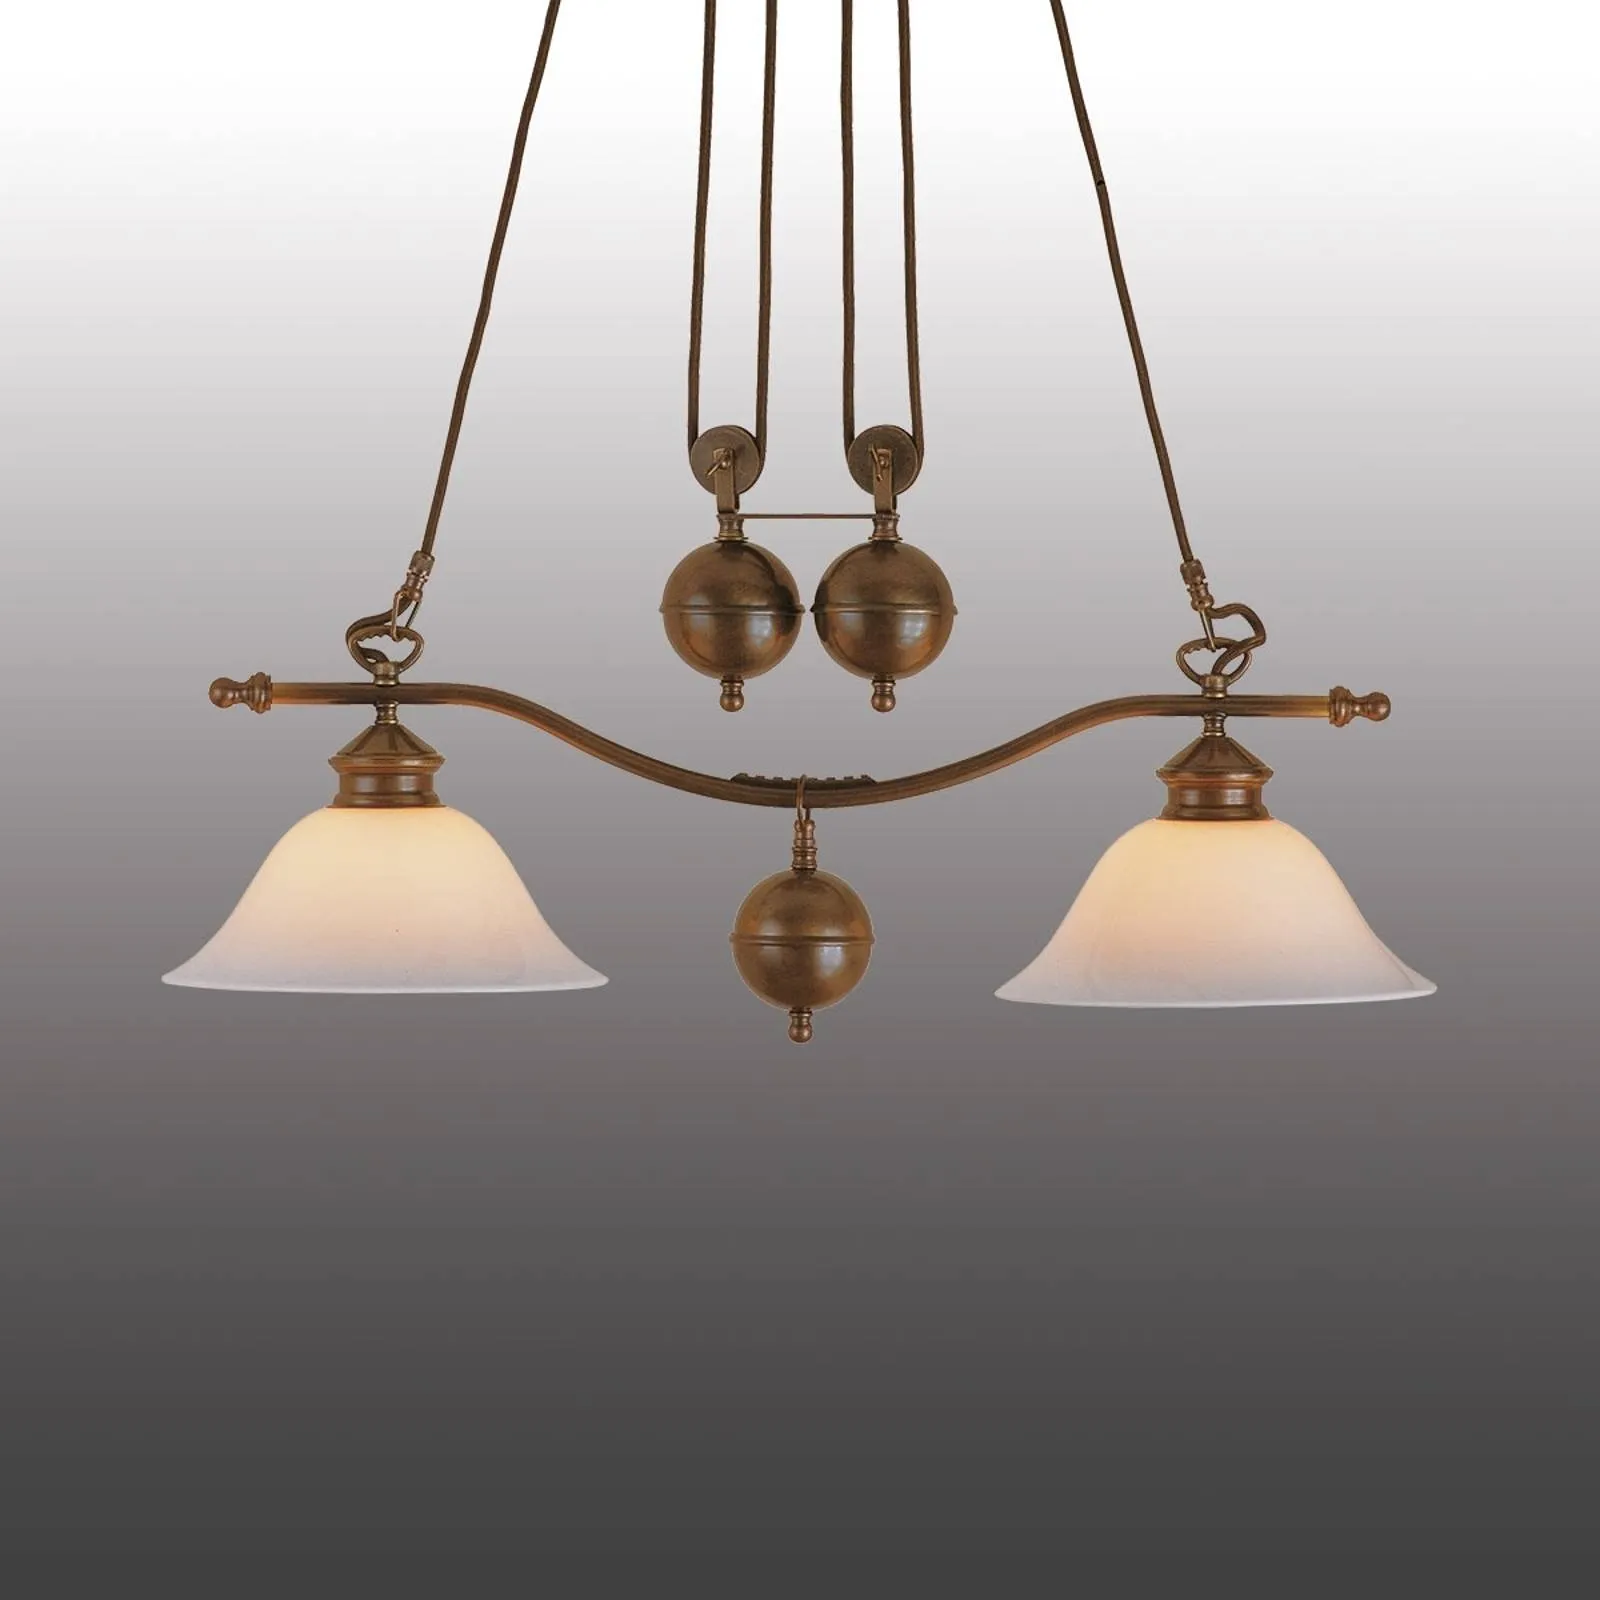 Year 1900 two-bulb pendant light